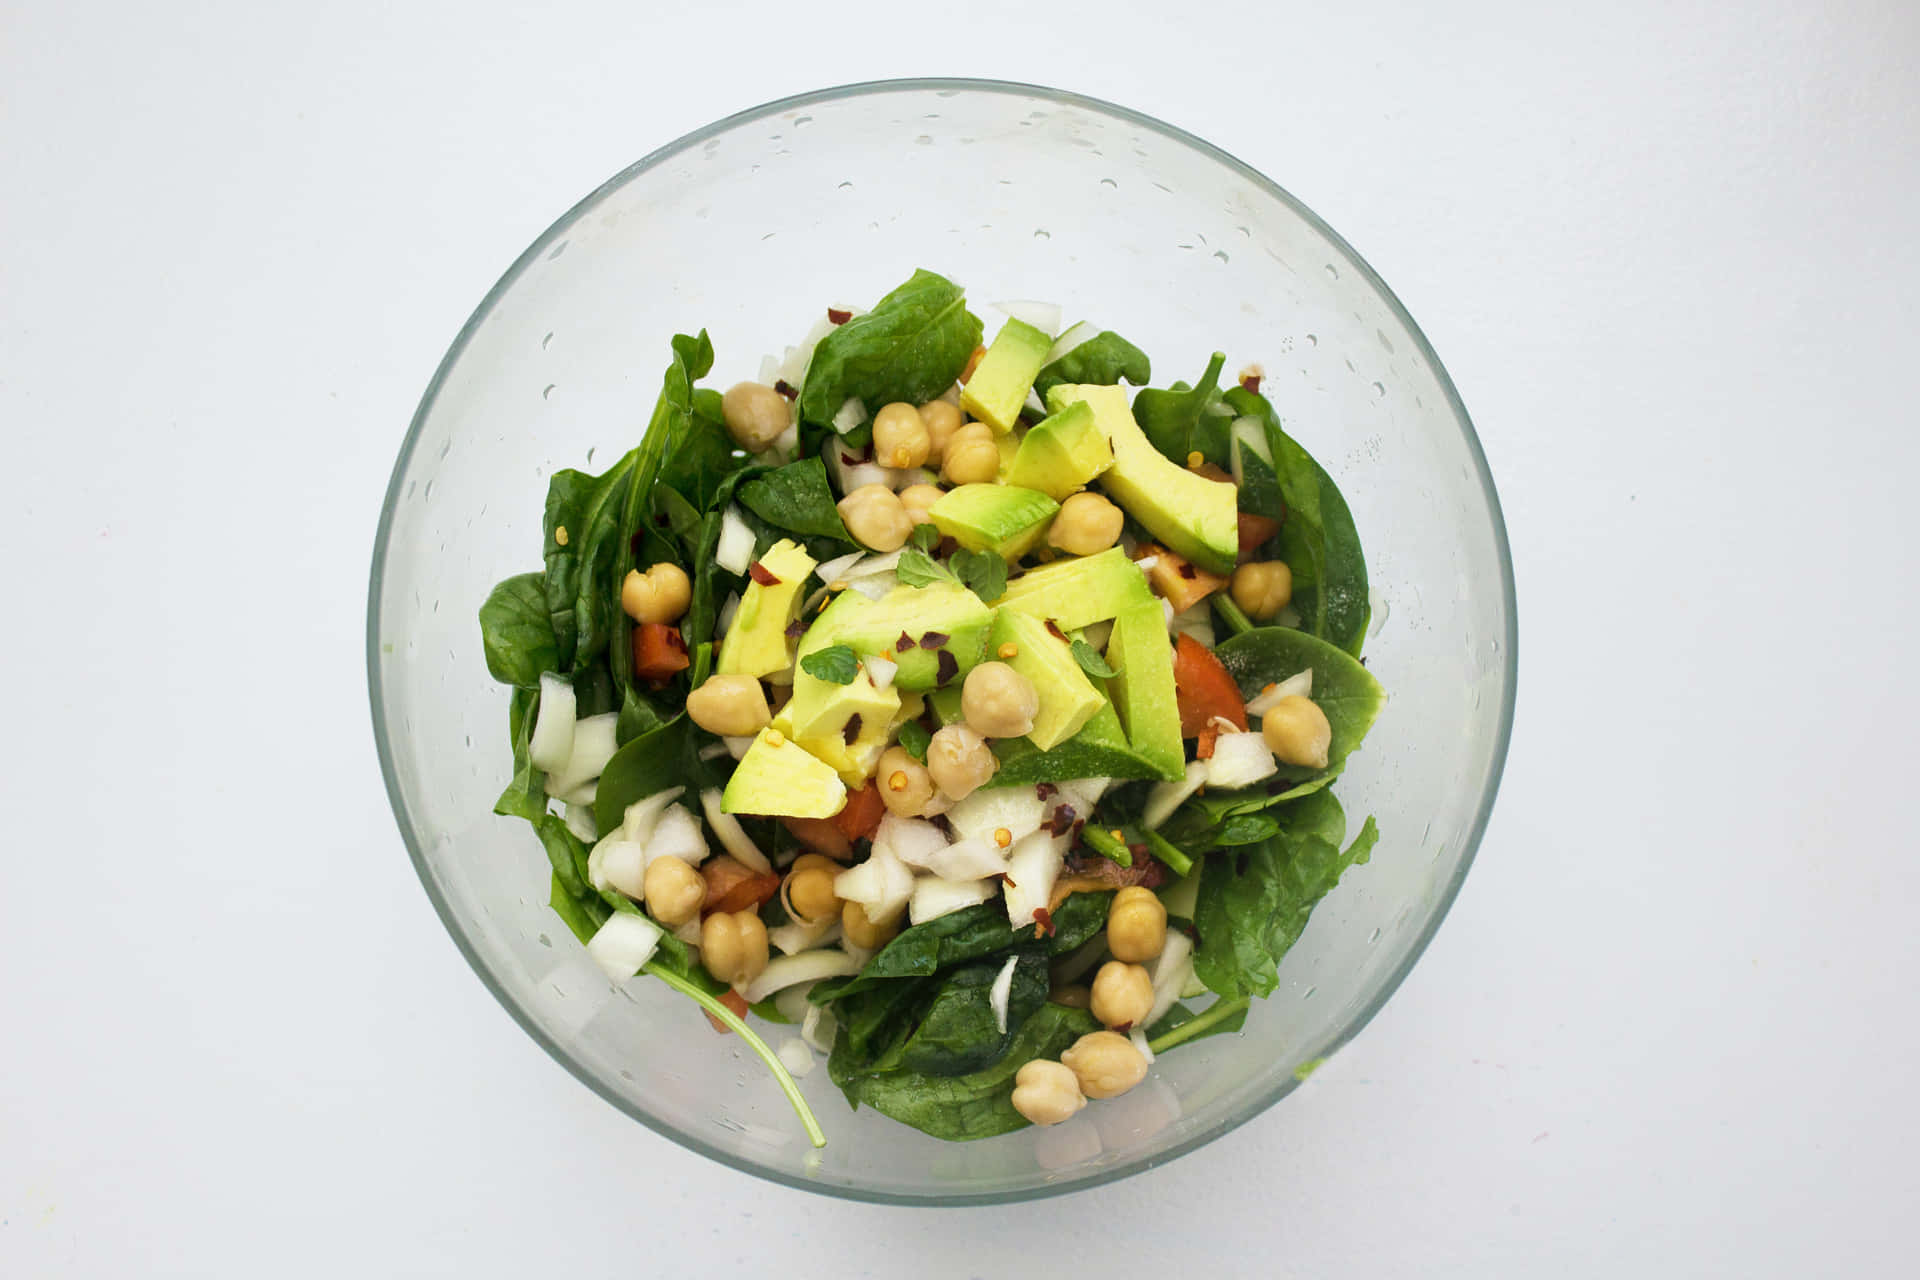 Enjoy Tasty and Healthy Salad